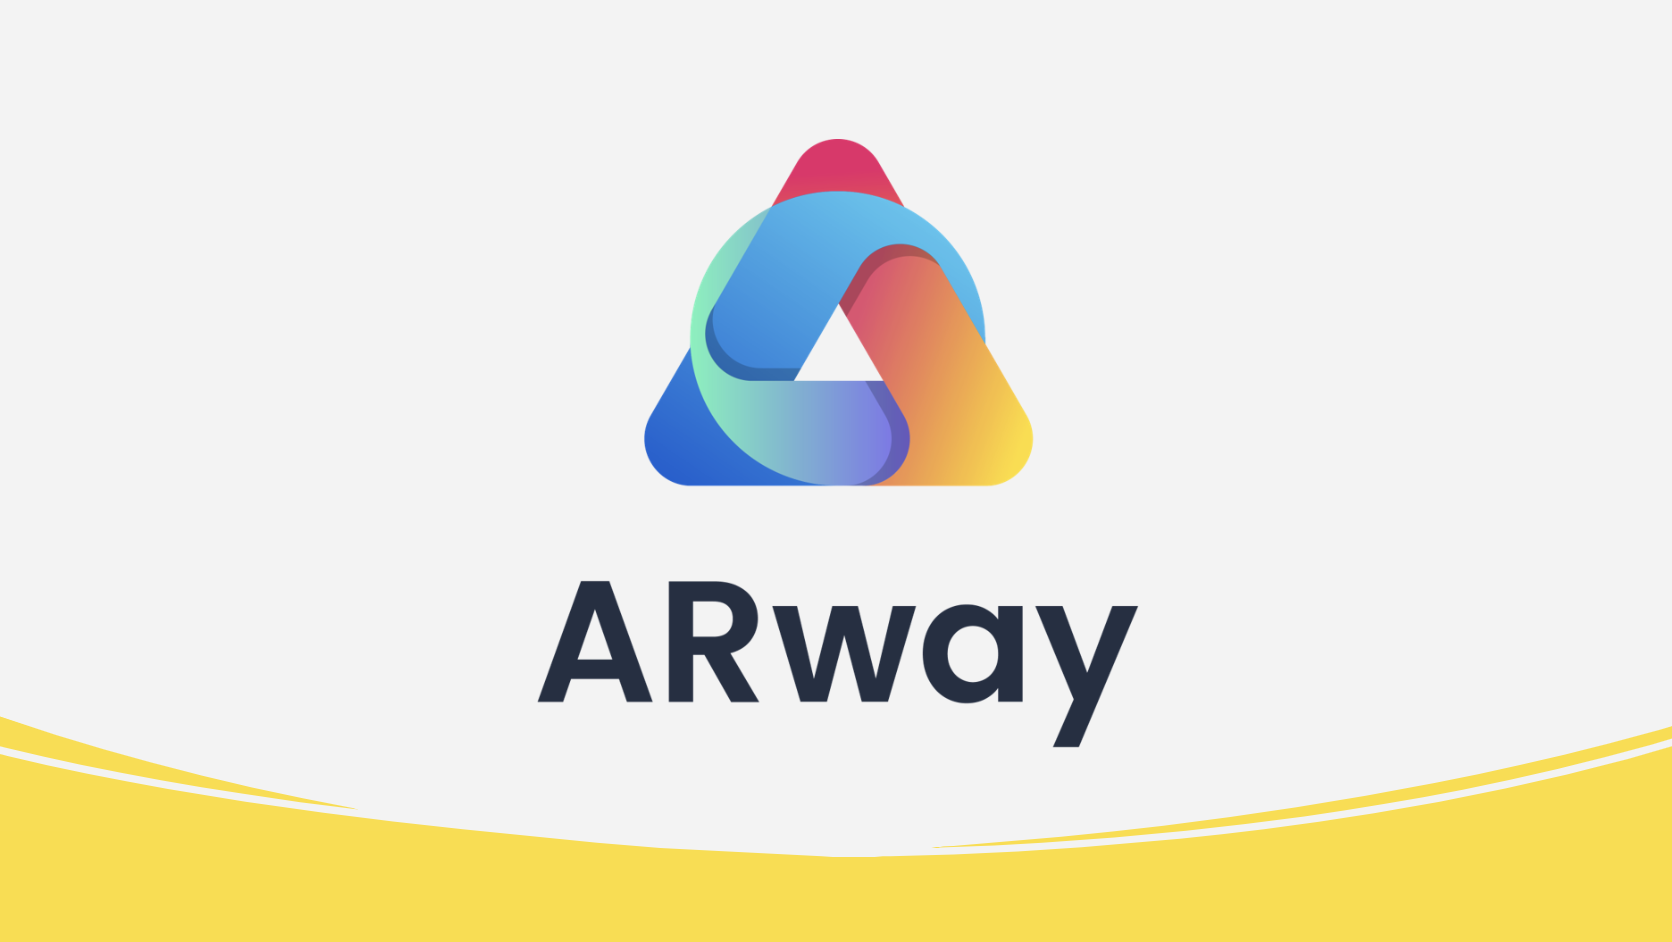 ARway